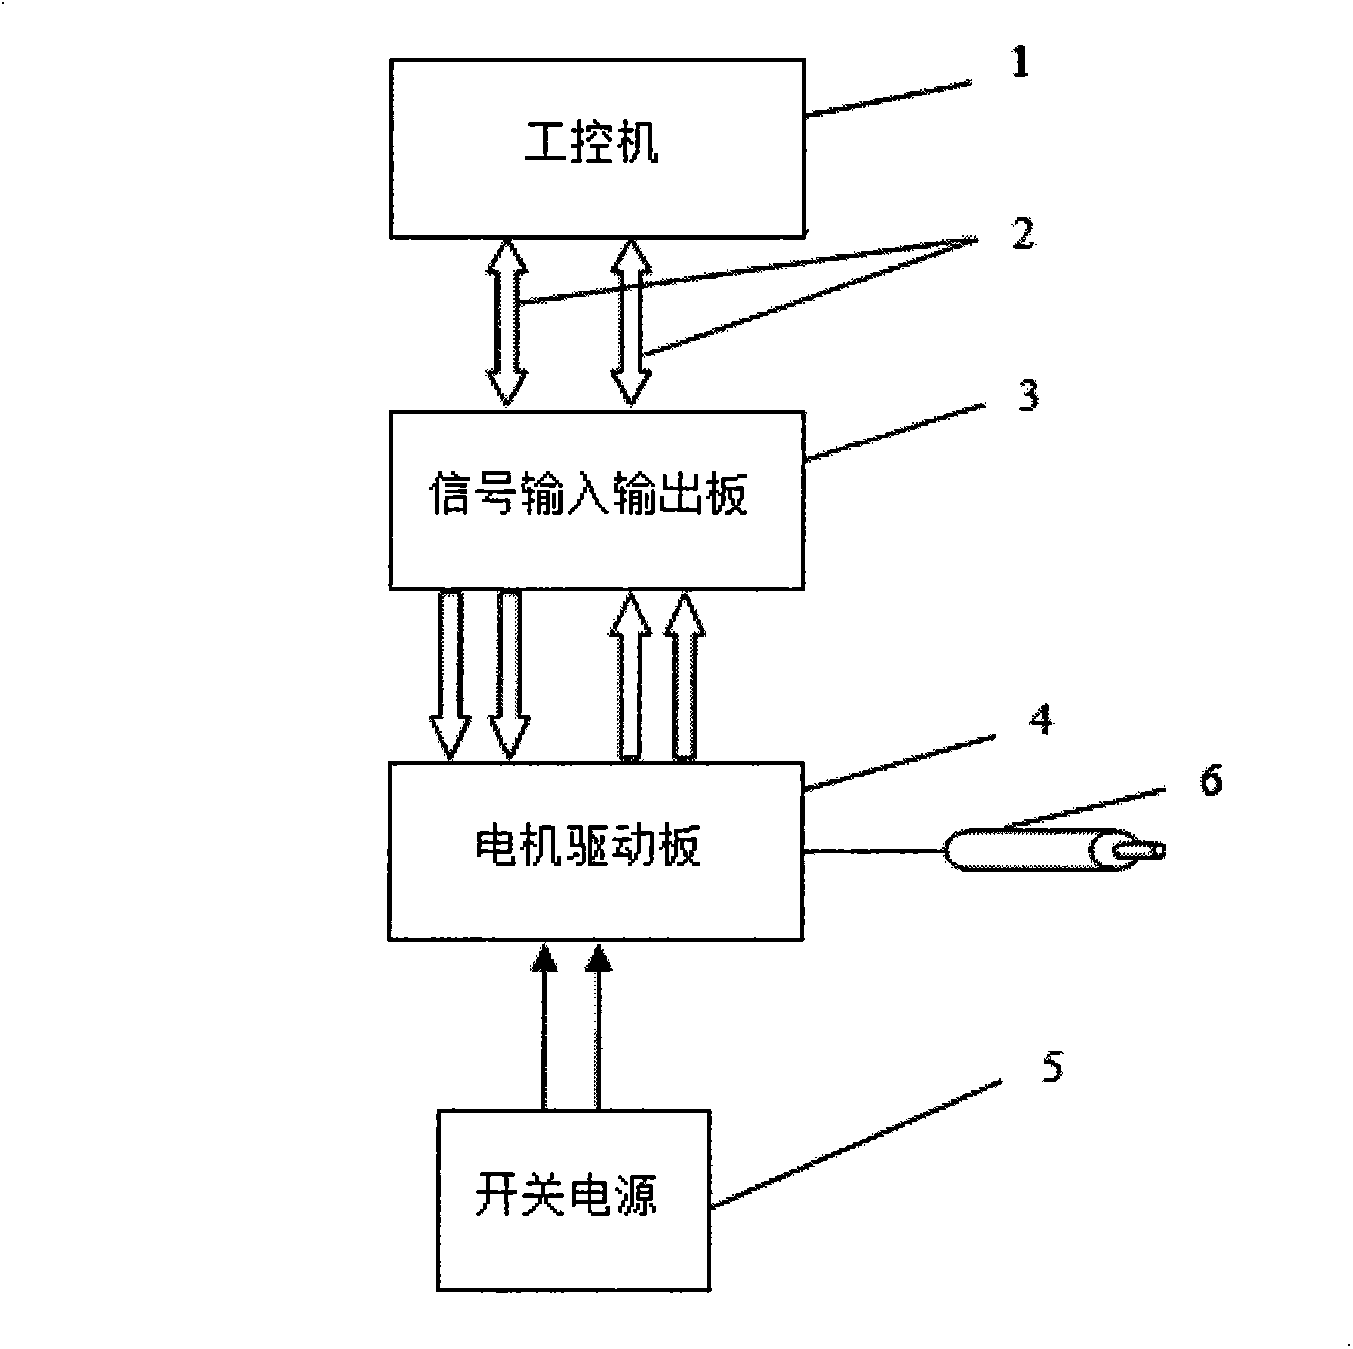 Method for adjusting multi-magnetic-pole motion control